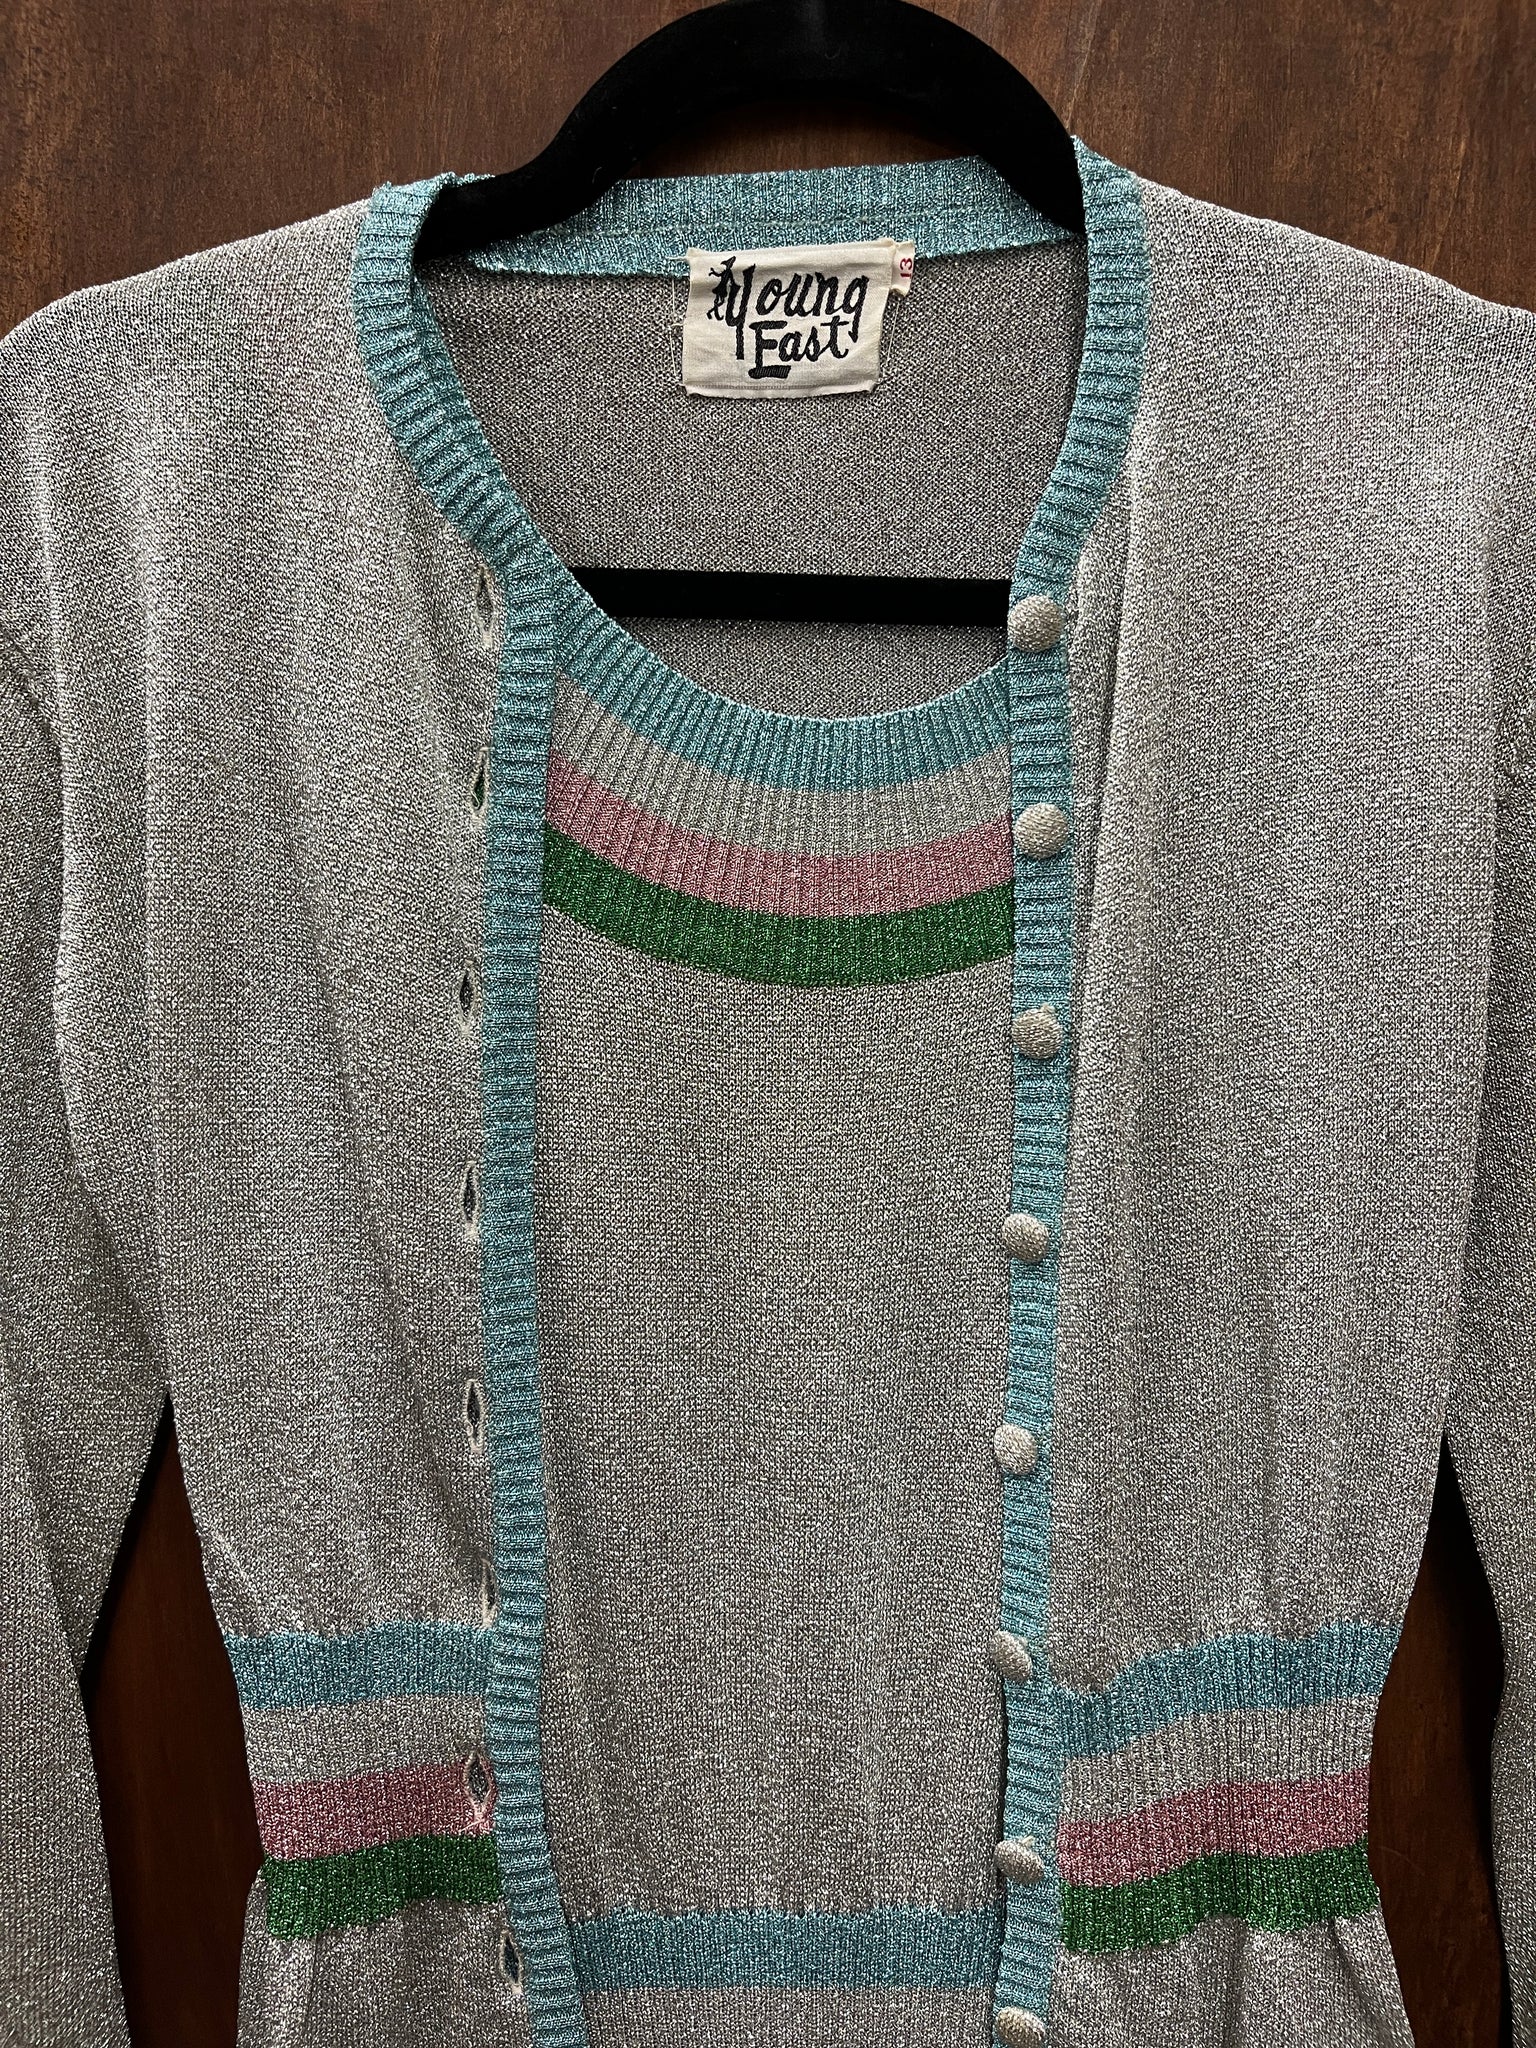 1970s 2 PIECE- DRESS SET-Young East silver lurex knit maxi dress & sweater